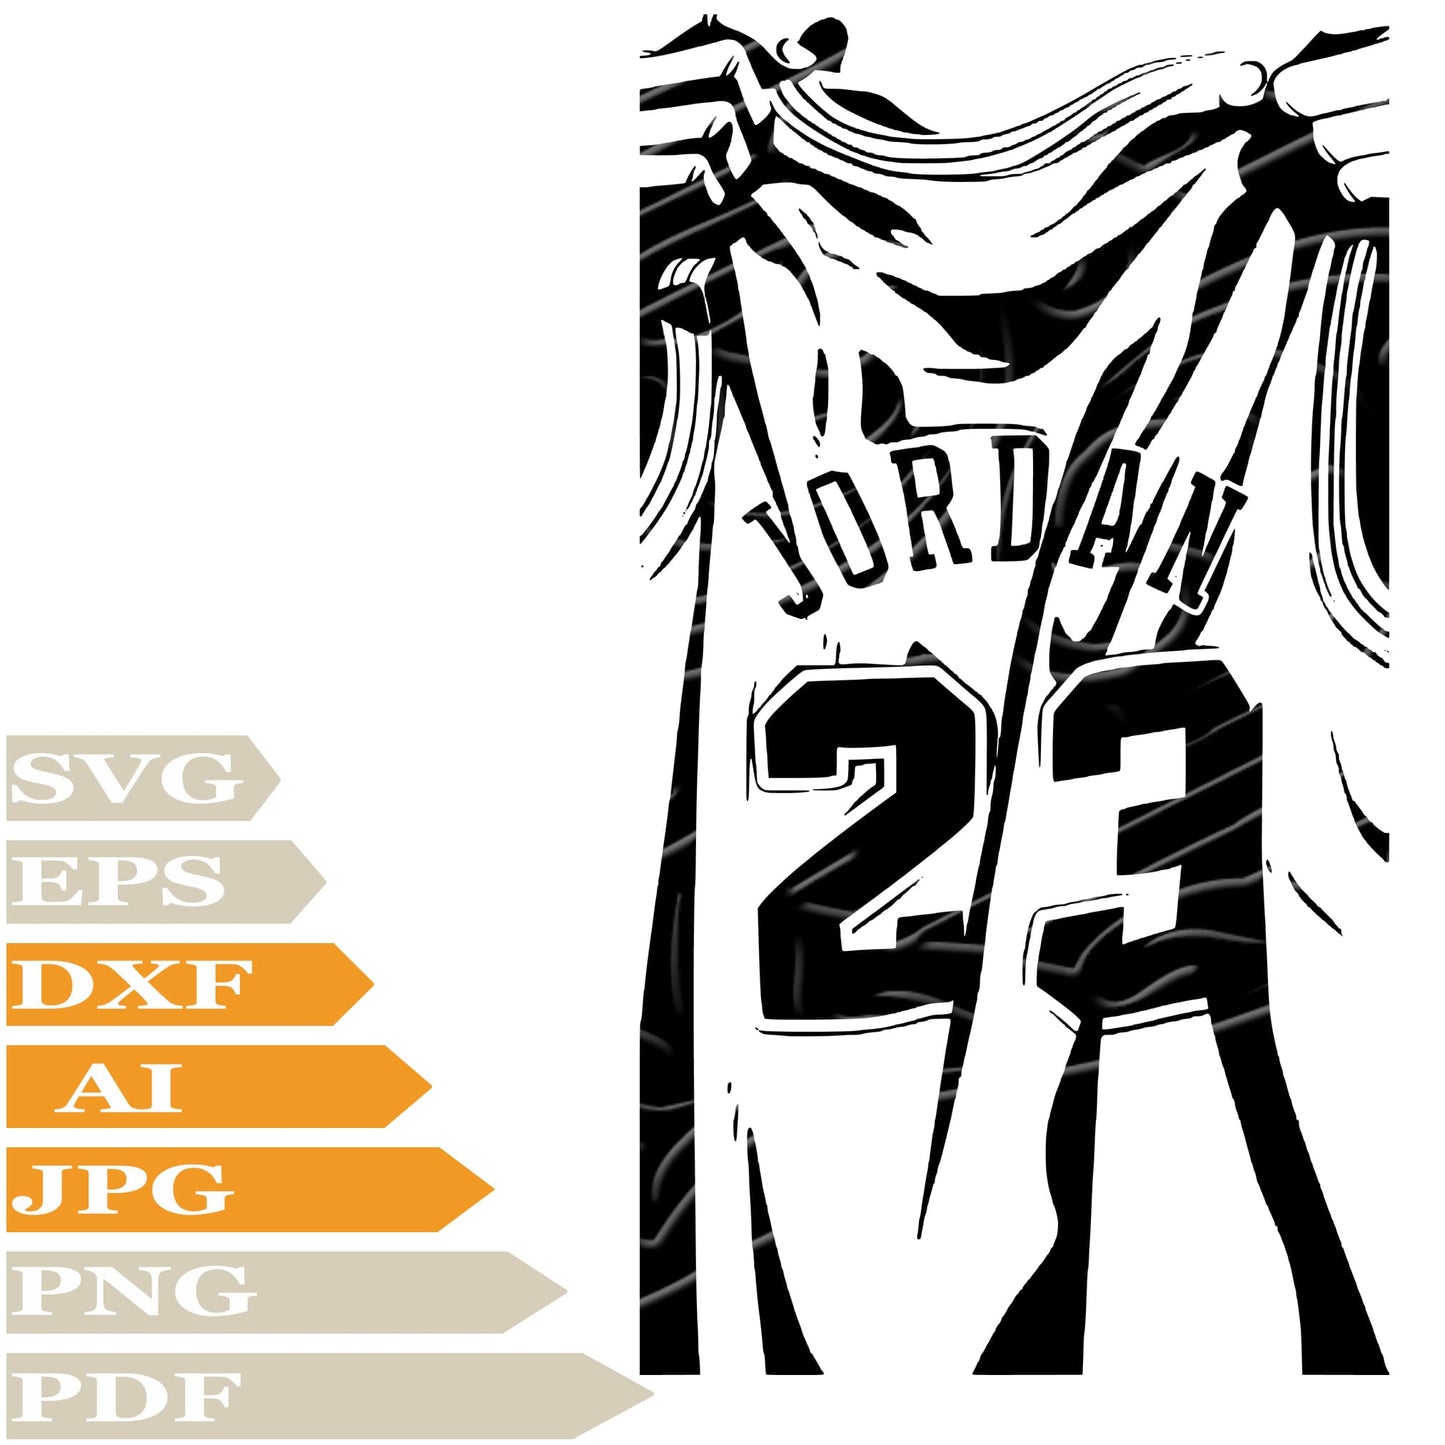 Michael Jordan SVG-Air Jordan Personalized SVG-Michael Jordan Drawing SVG-Michael Jordan Vector Illustration-PNG-Decal-Cricut-Digital Files-Clip Art-Cut File-For Shirts-Silhouette